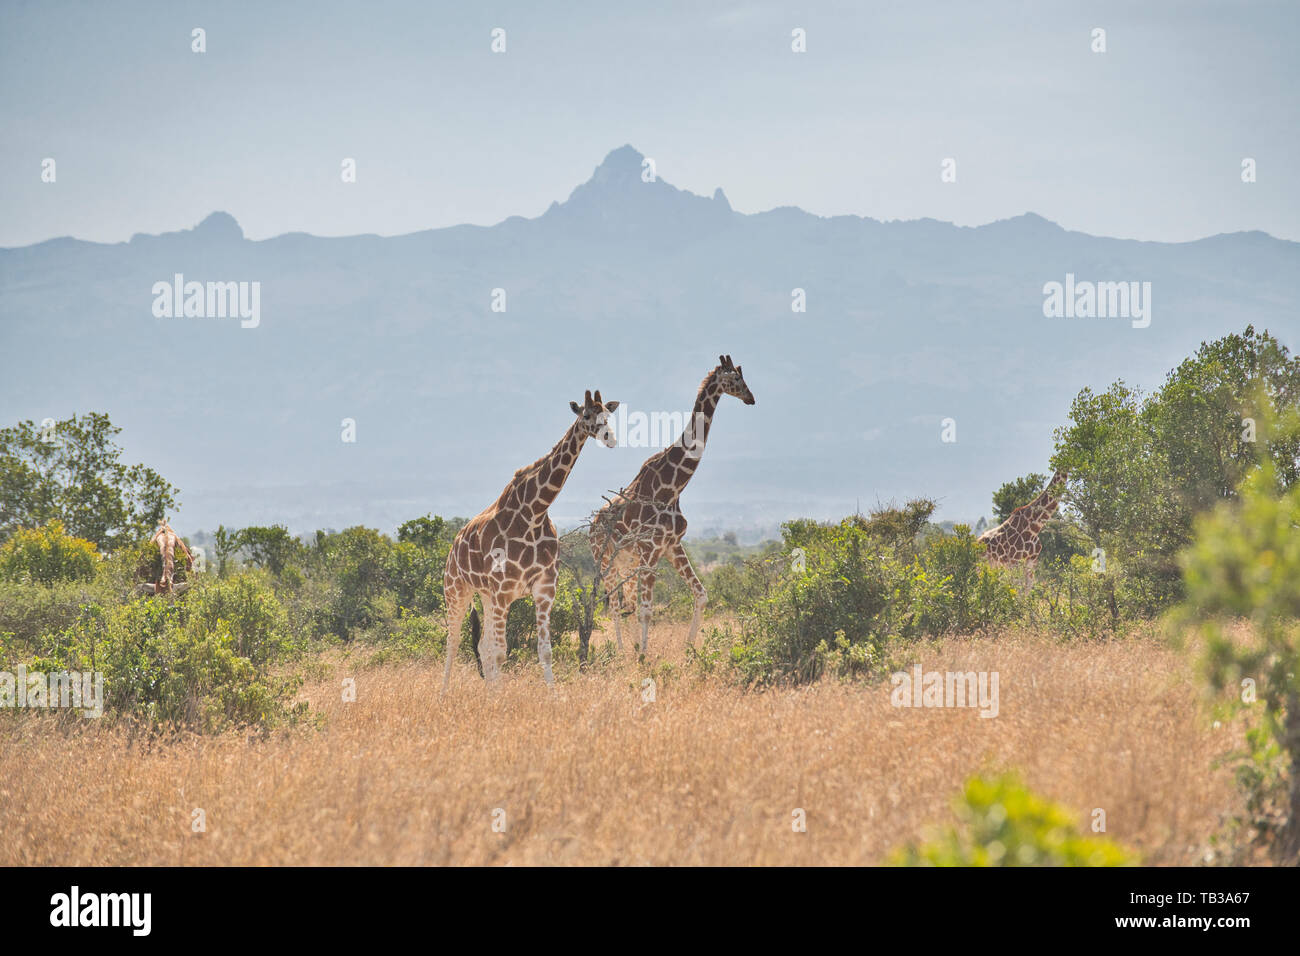 Reticulated giraffe (Giraffa camelopardalis reticulata) with Mount Kenya in the background Stock Photo